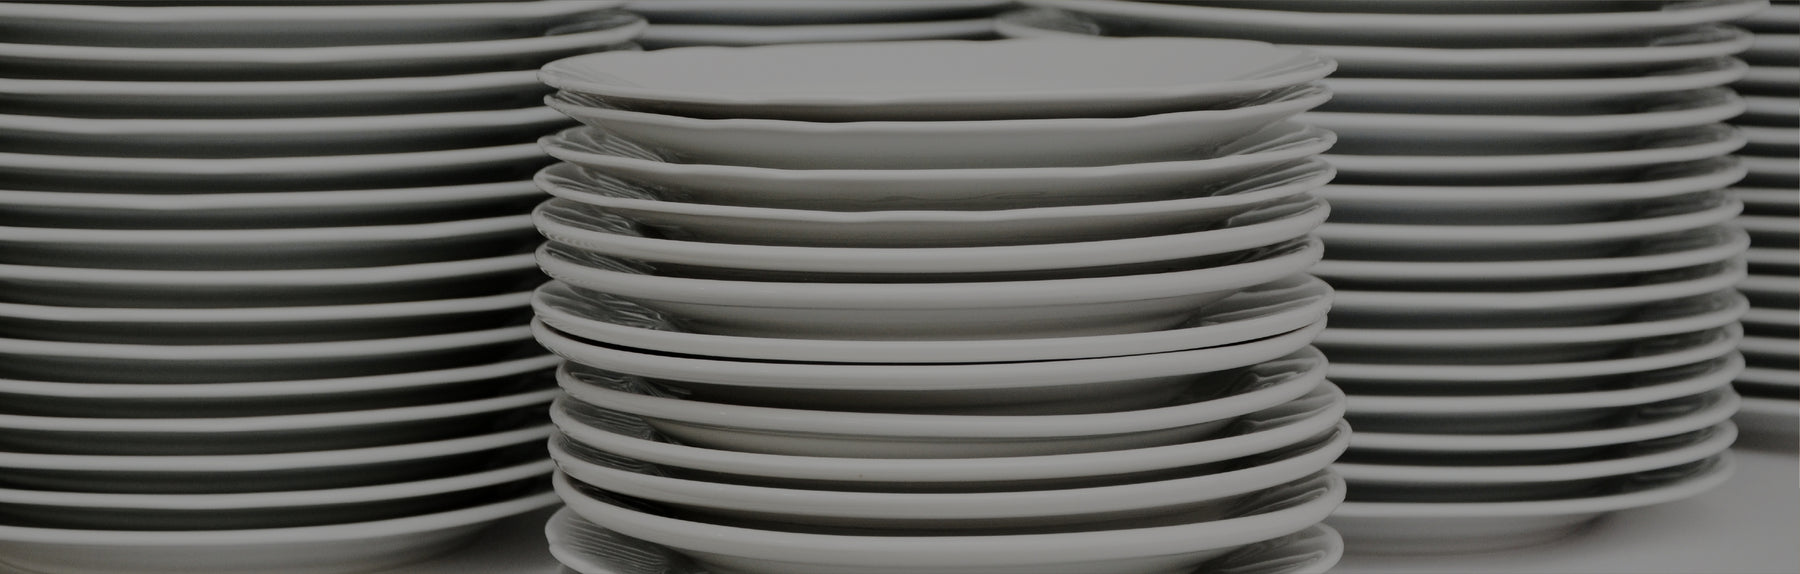 Stacks of white china dinner plates